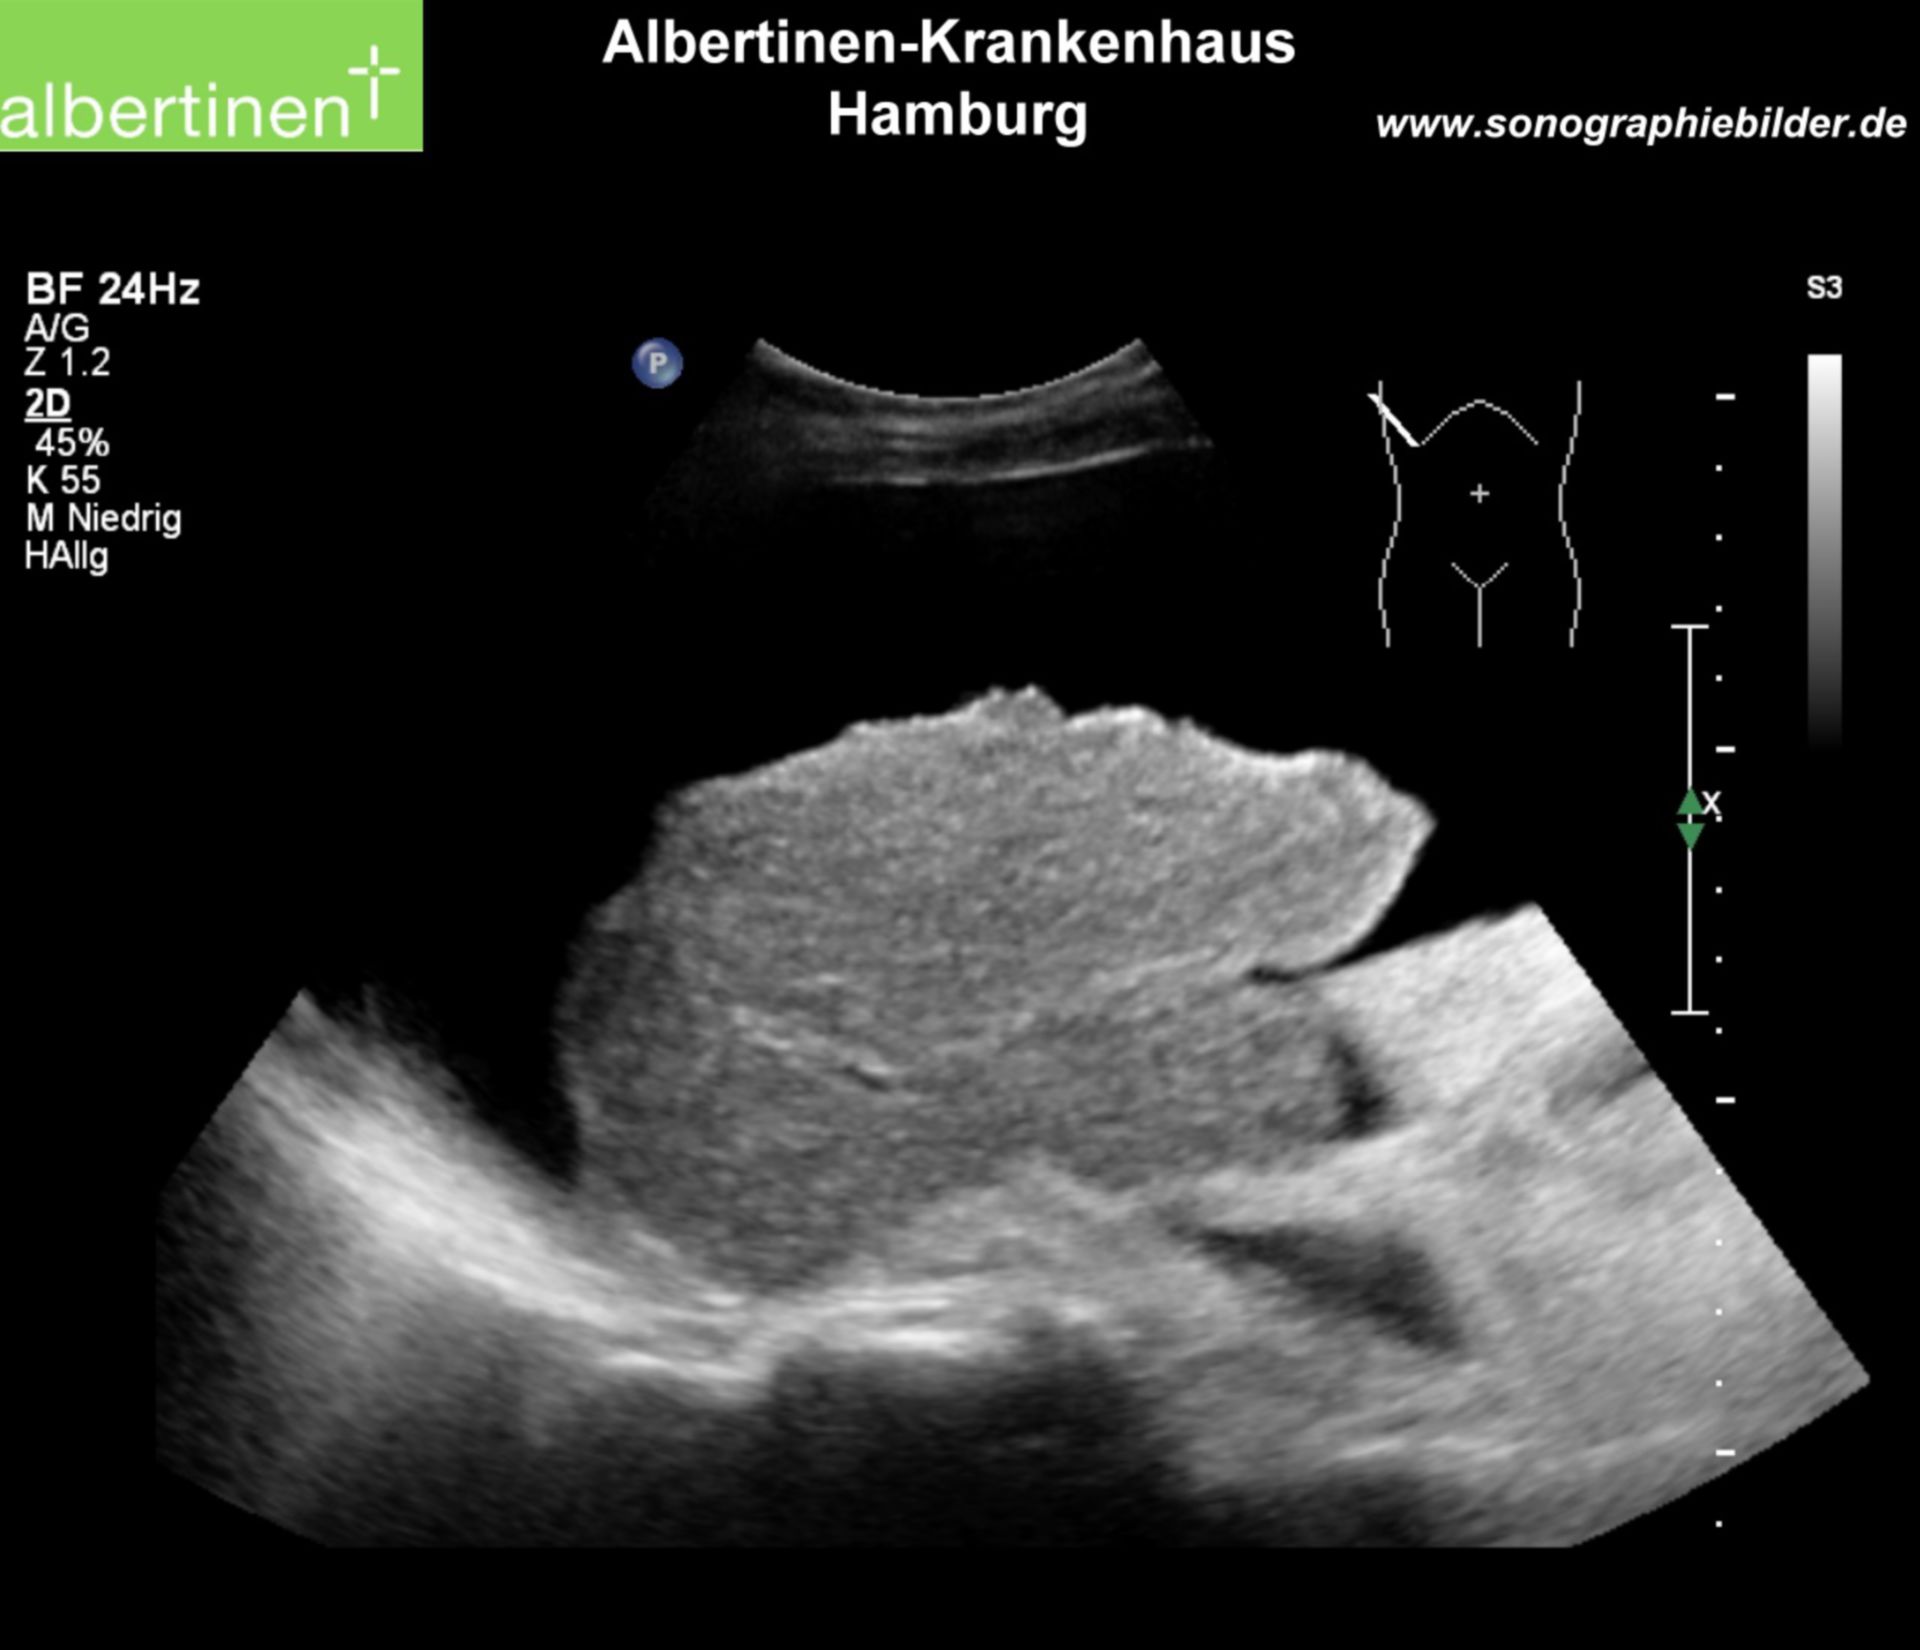 Cirrhosis, small liver, ascites (ultrasound)